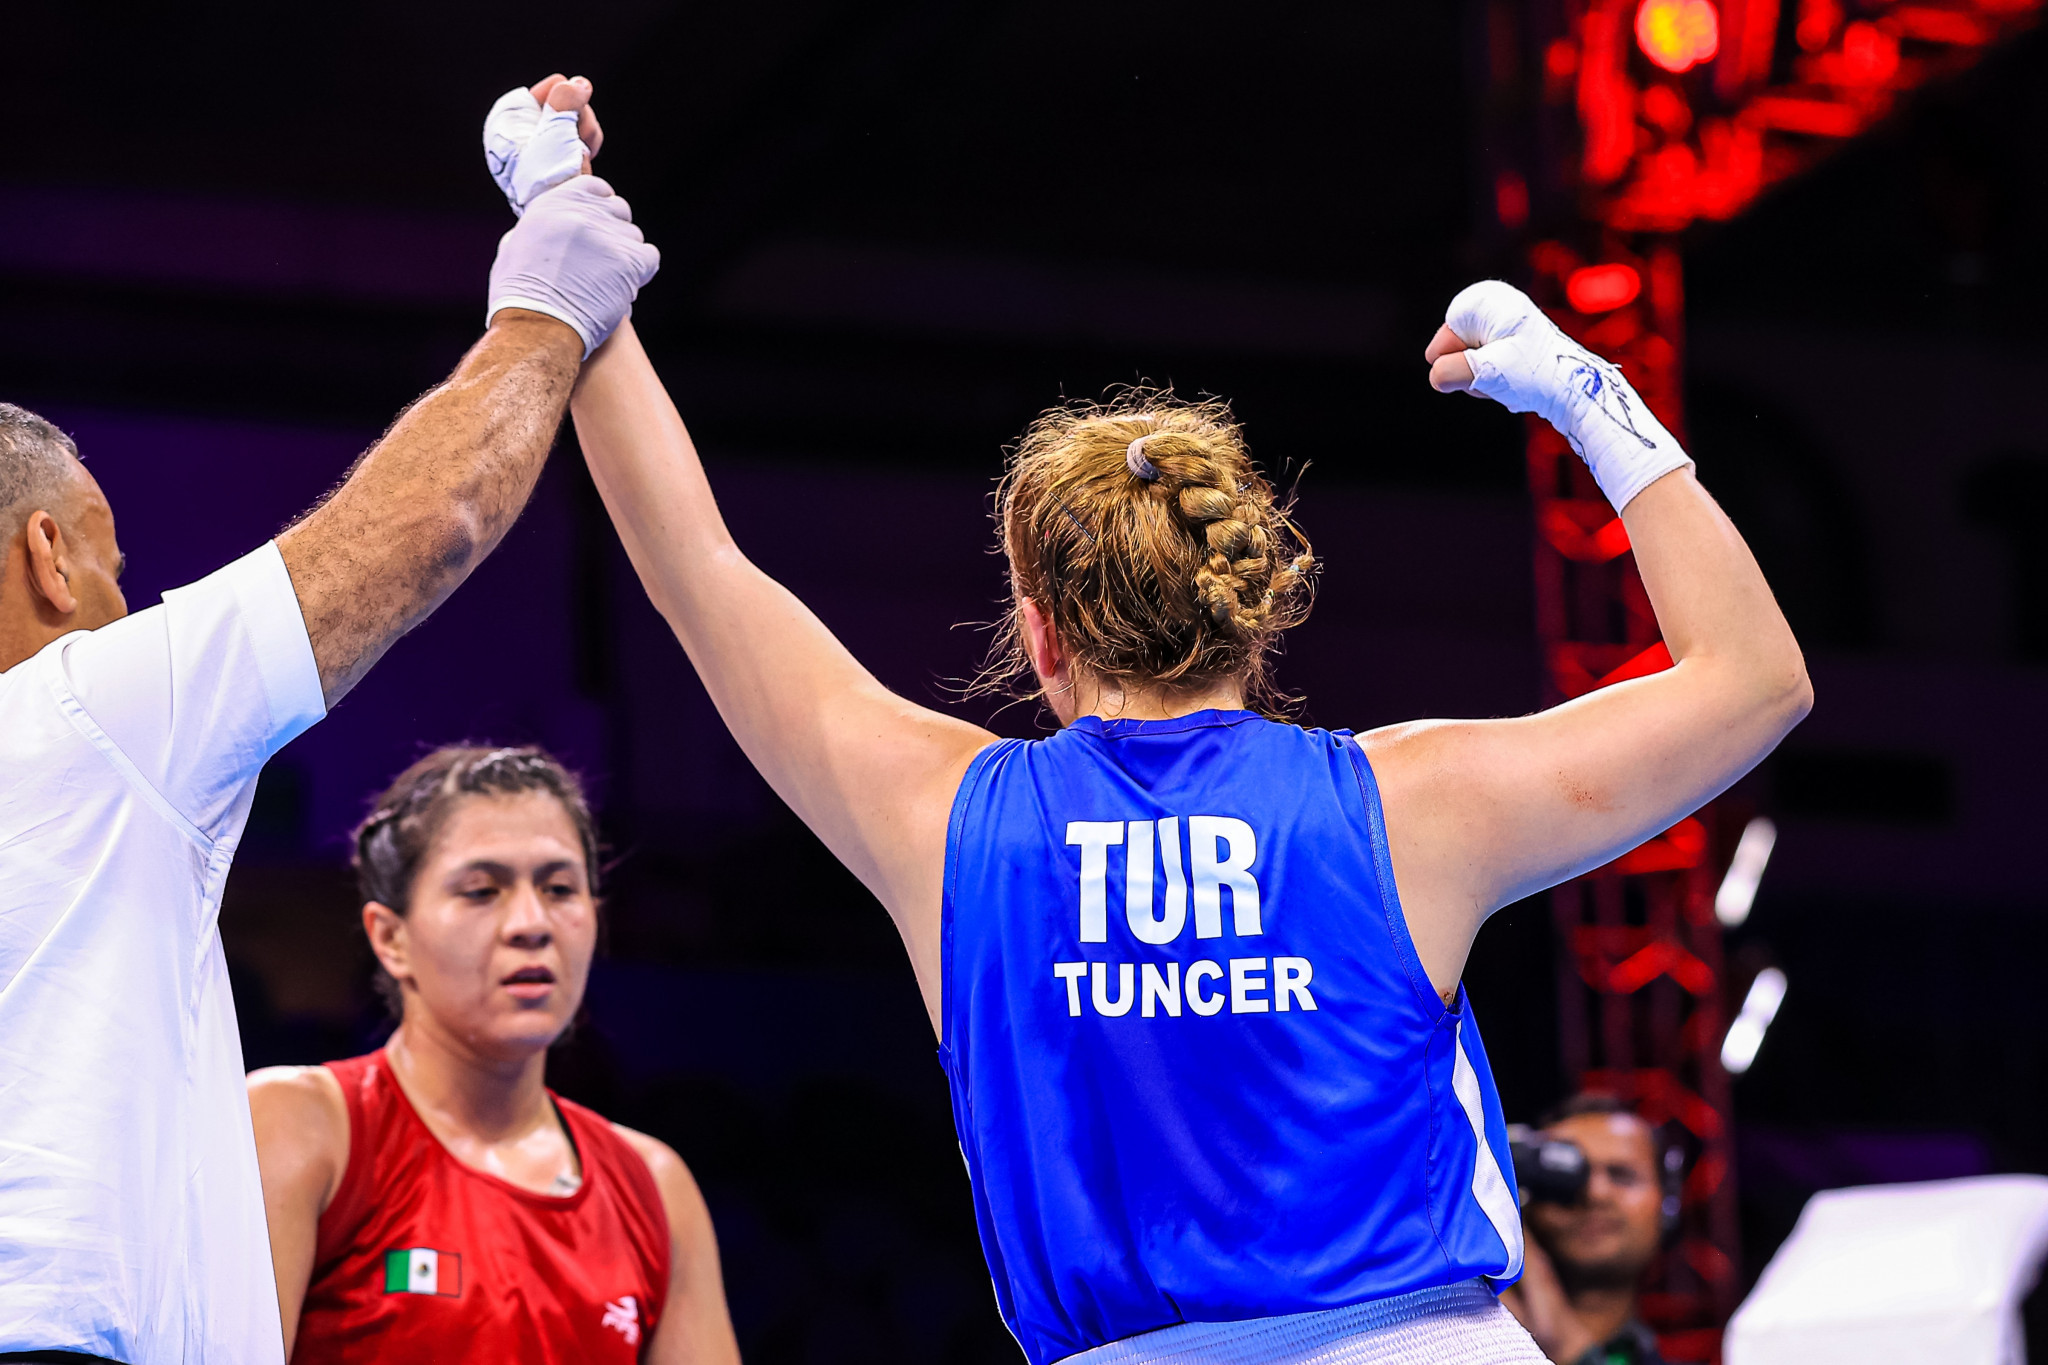 Turkey's Zehra Ceren Tuncer was announced as the winner to the disbelief of Mexico's Joycelyn Enedina García López ©IBA